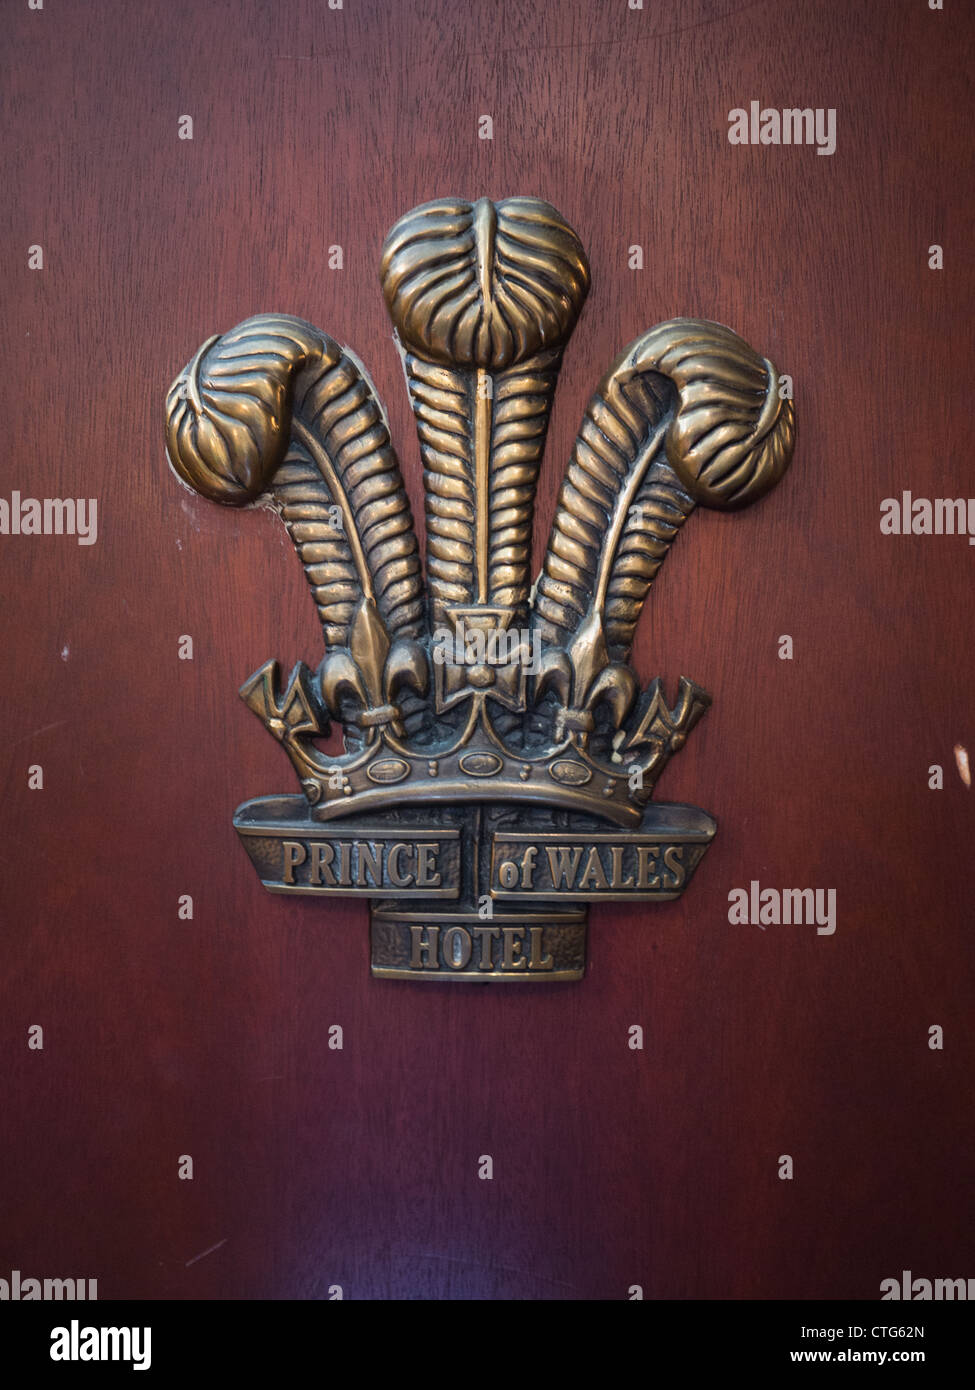 prince of wales hotel logo symbol Stock Photo